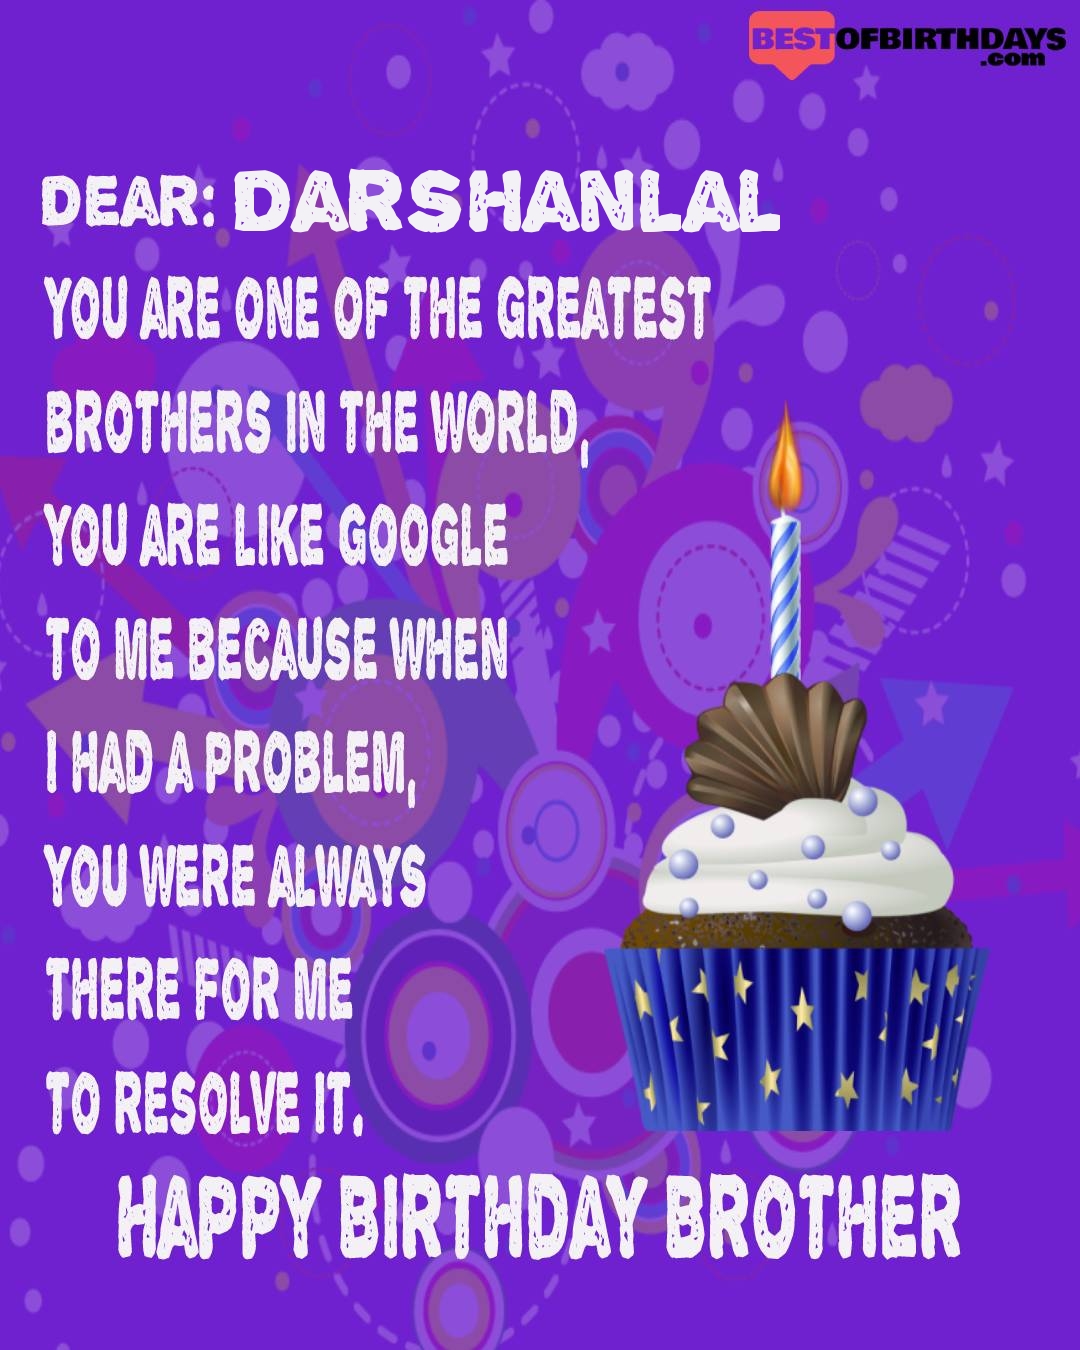 Happy birthday darshanlal bhai brother bro